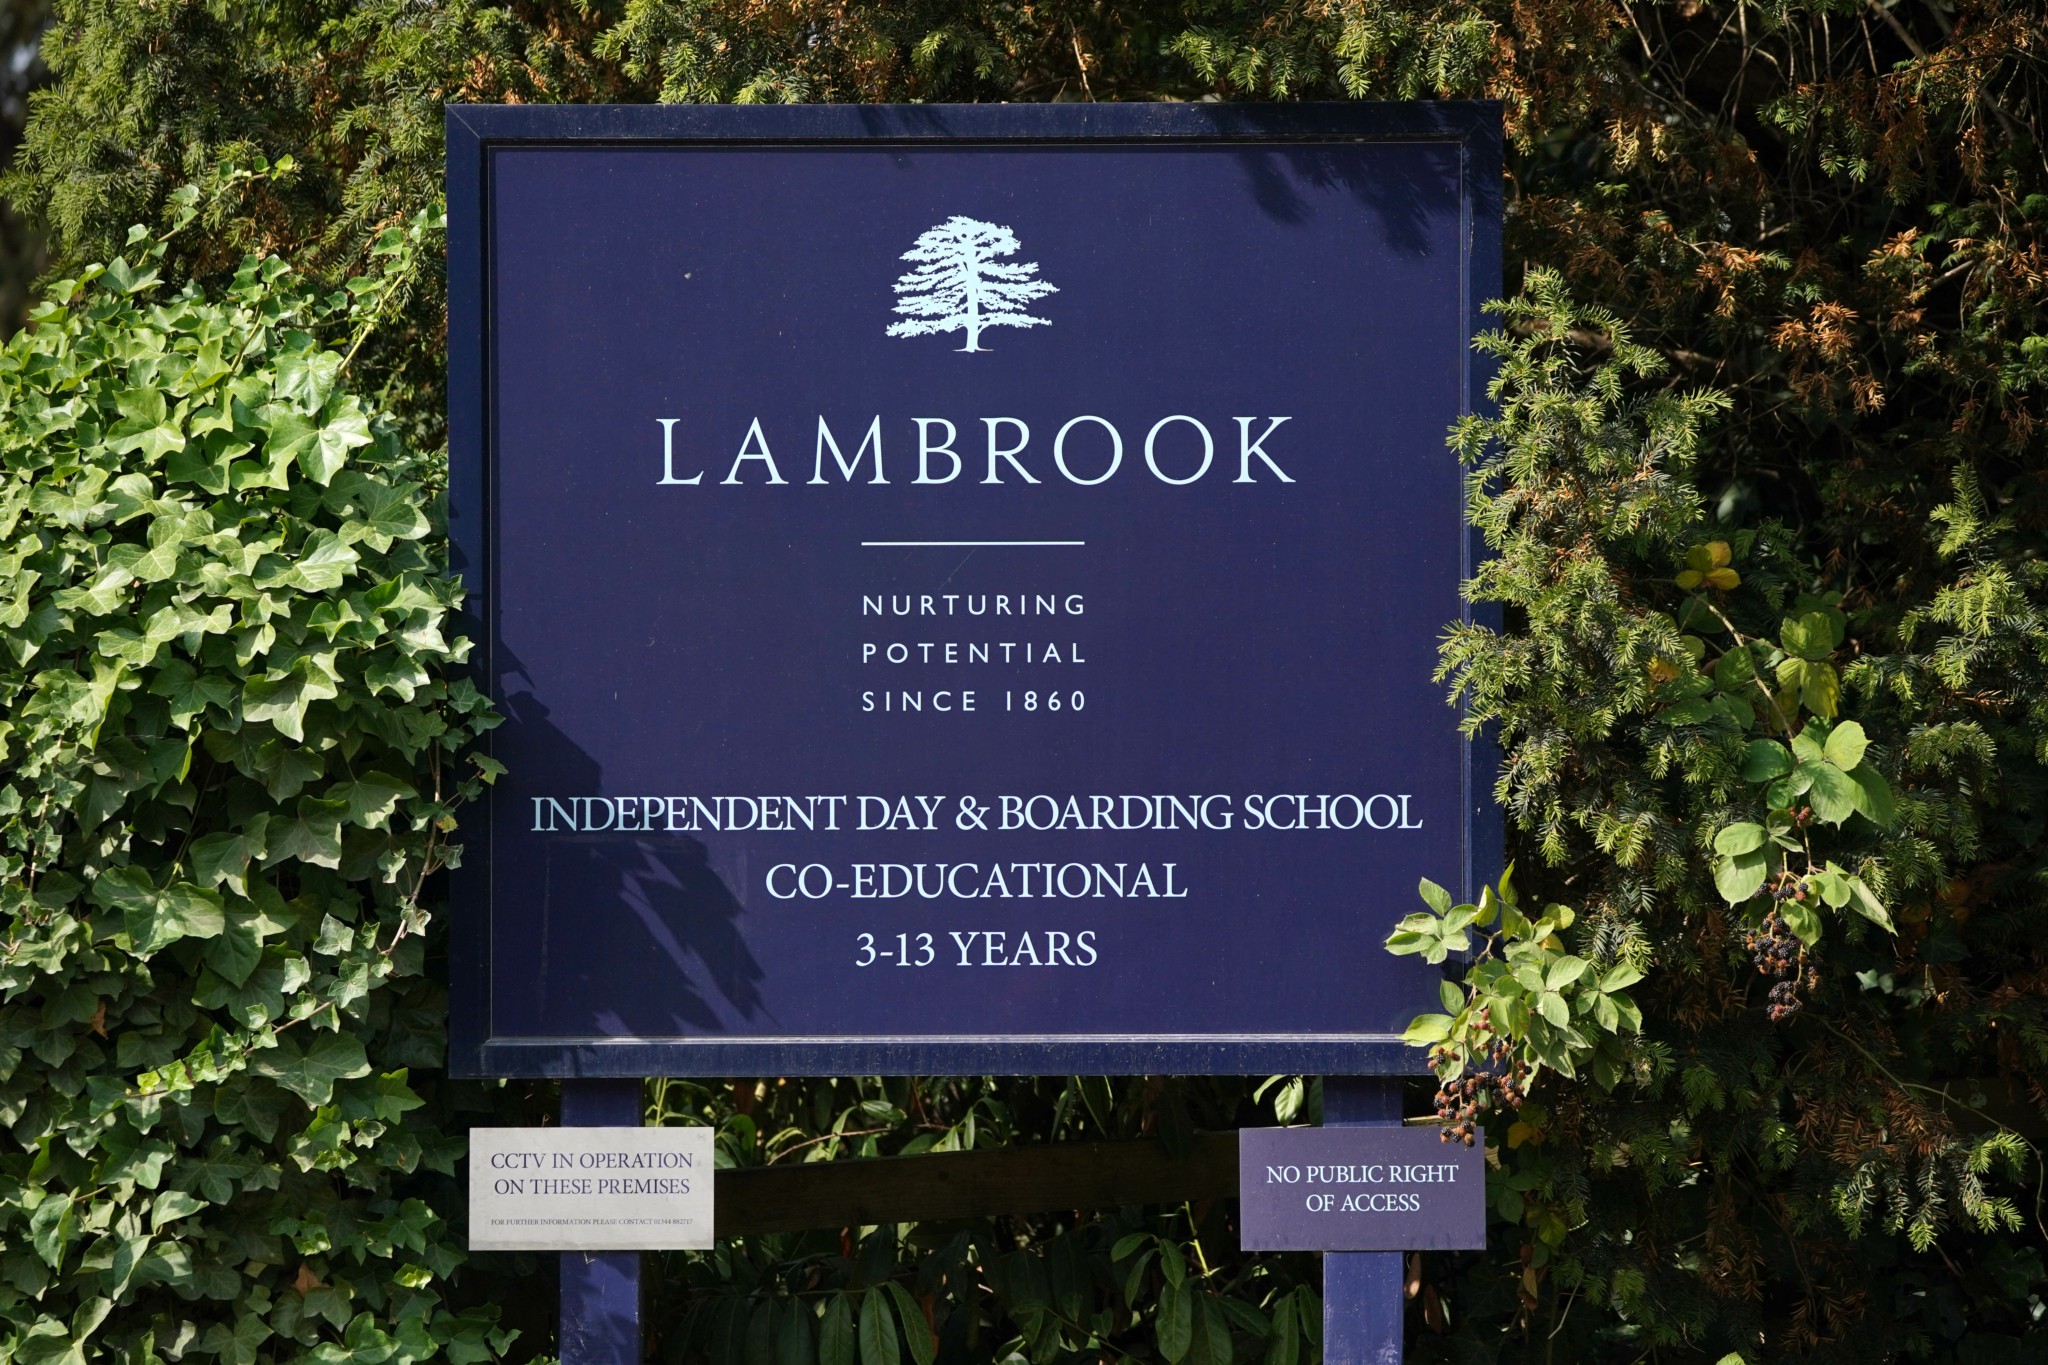 Lambrook School: This is a school 